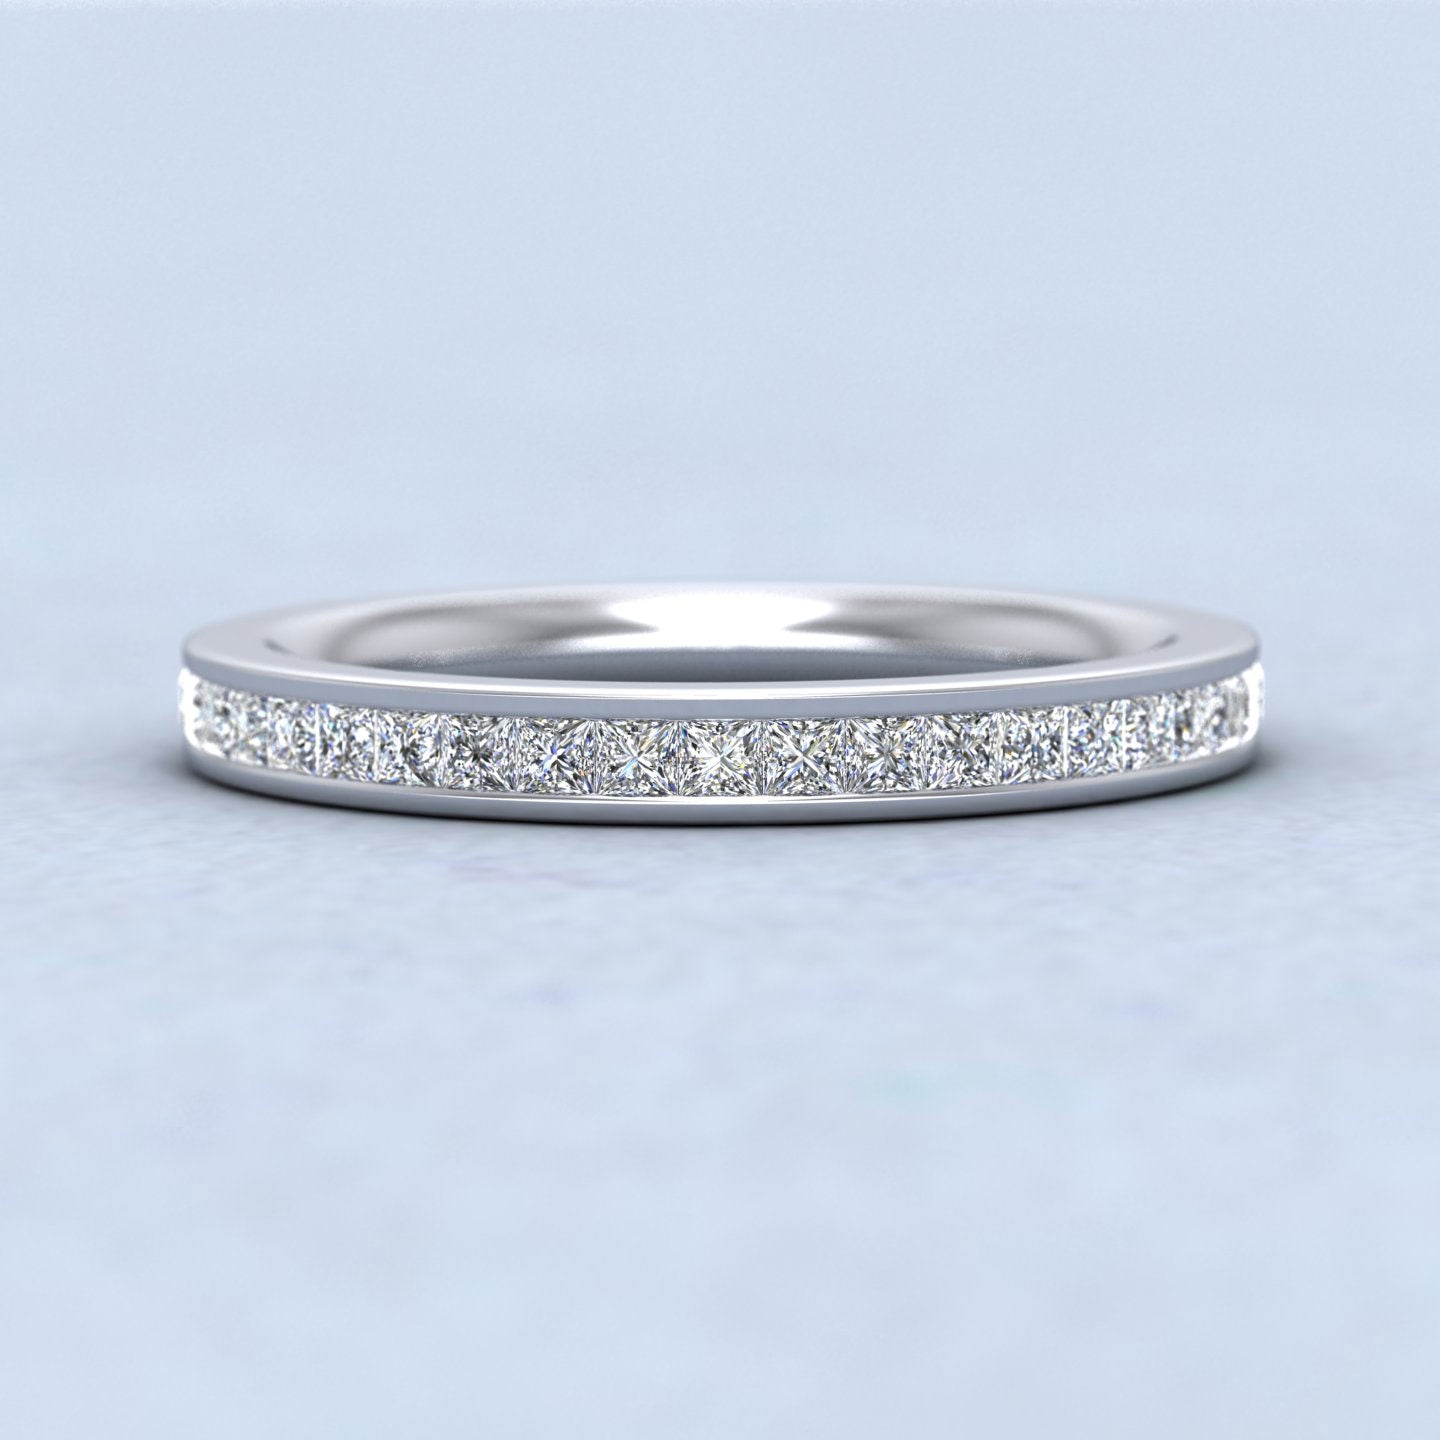 Full Channel Set Princess Cut Diamond 950 Platinum 2.5mm Wedding Ring